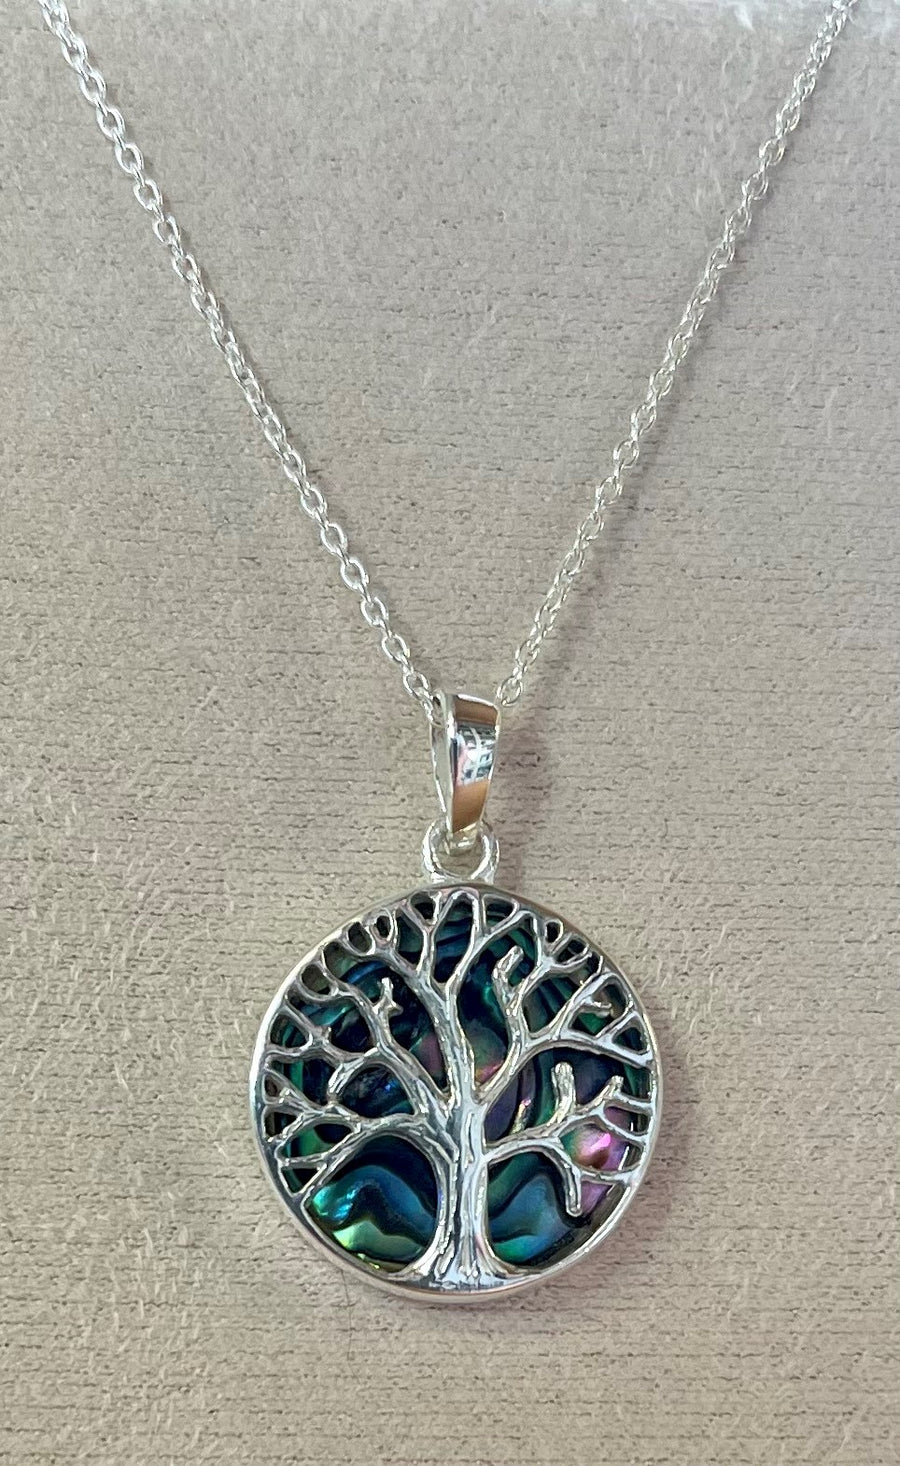 Paua pendant tree of life